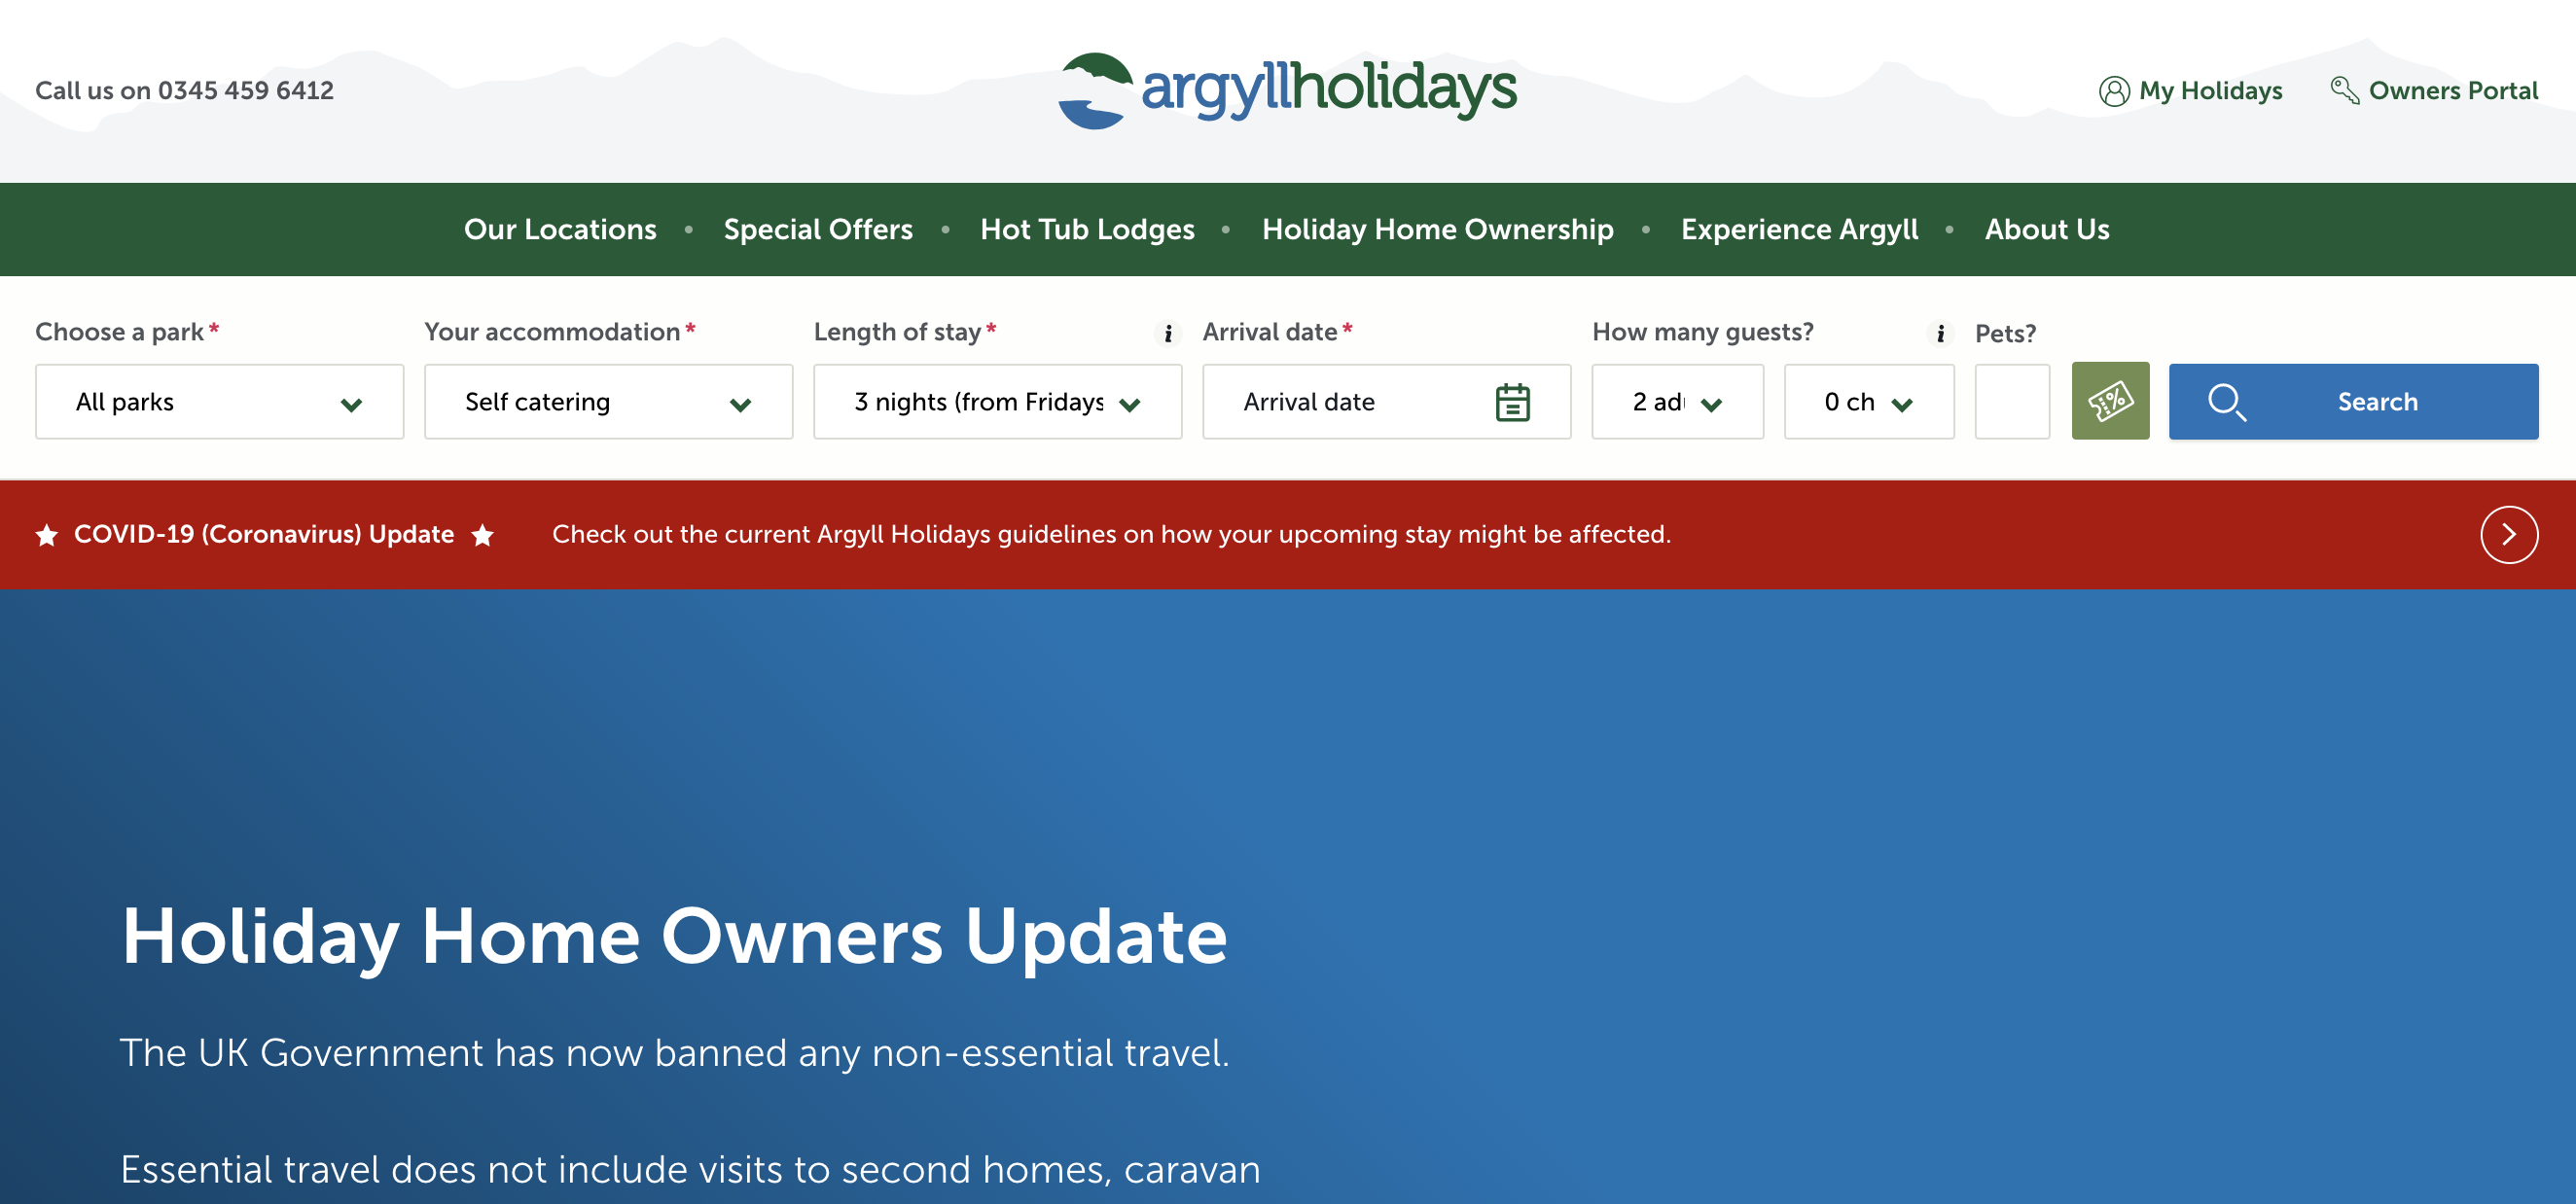 Argyll Holidays homepage